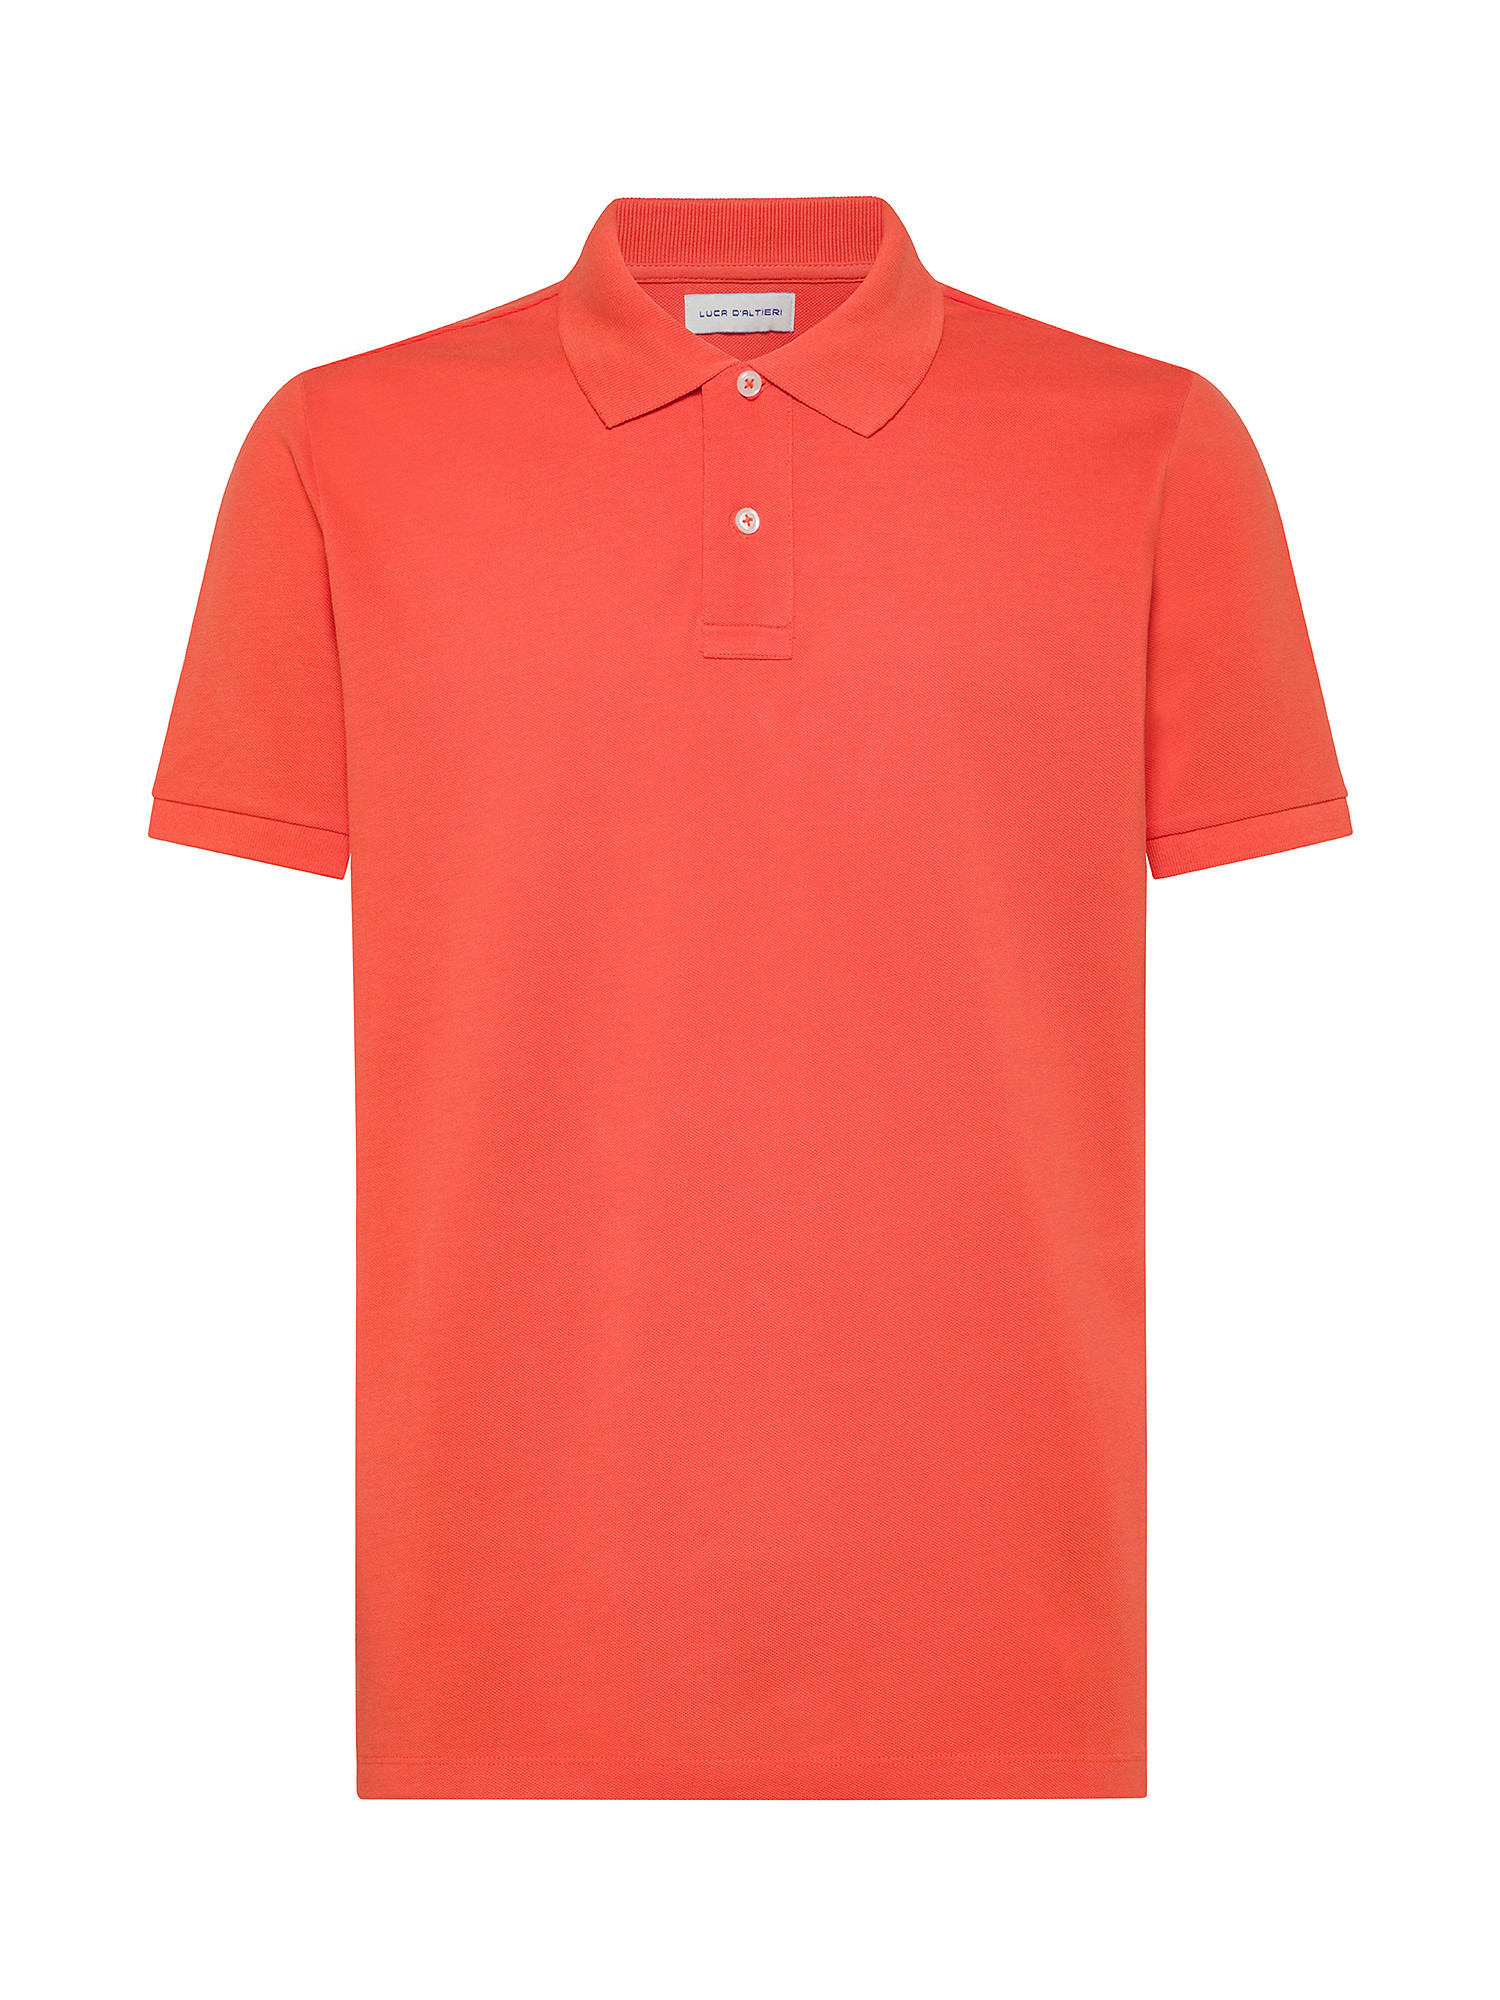 Luca D'Altieri - Polo in pure cotton, Orange, large image number 0